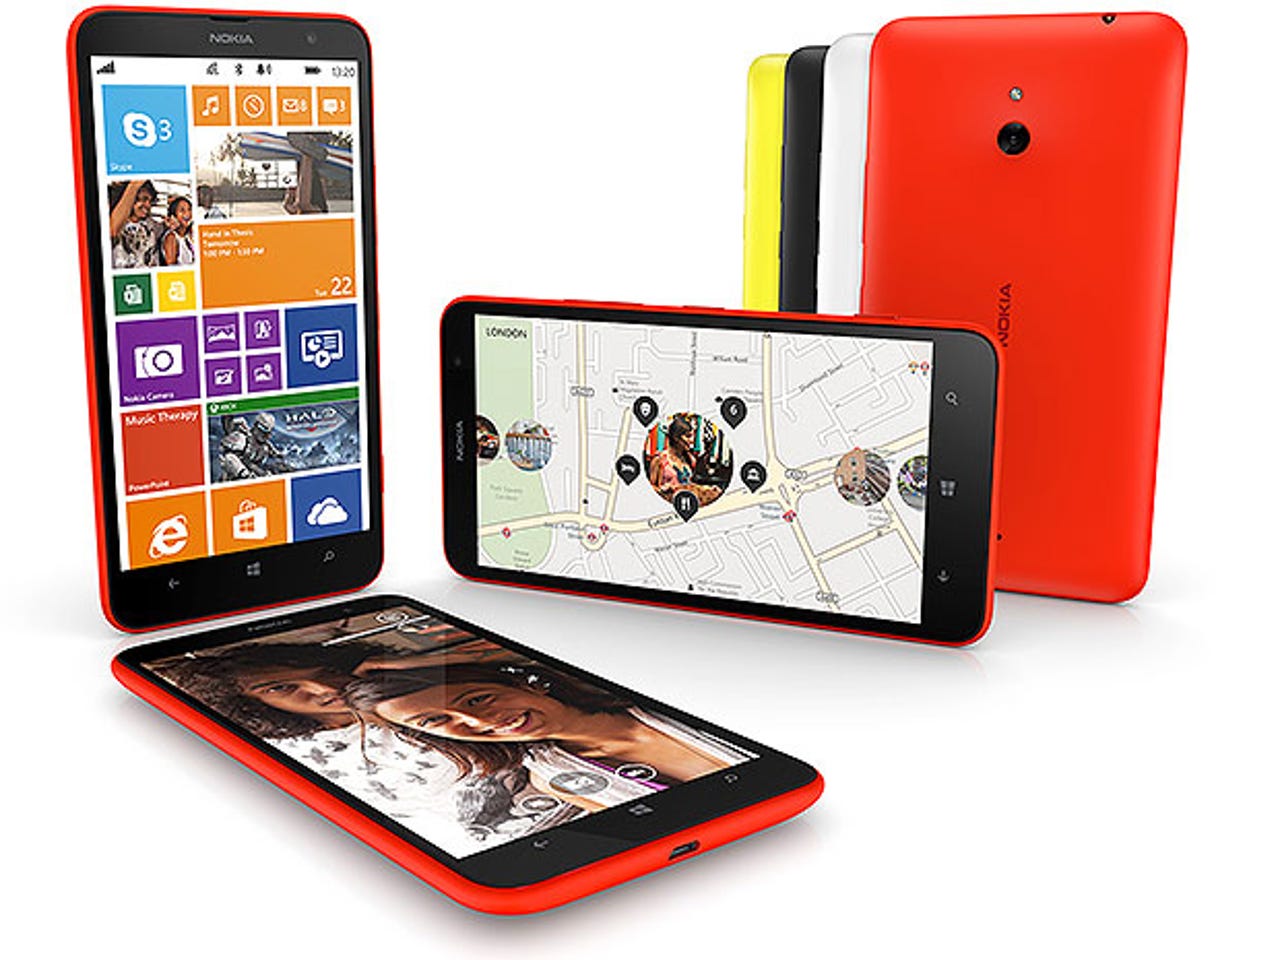 Nokia's Lumia 1320 phablet